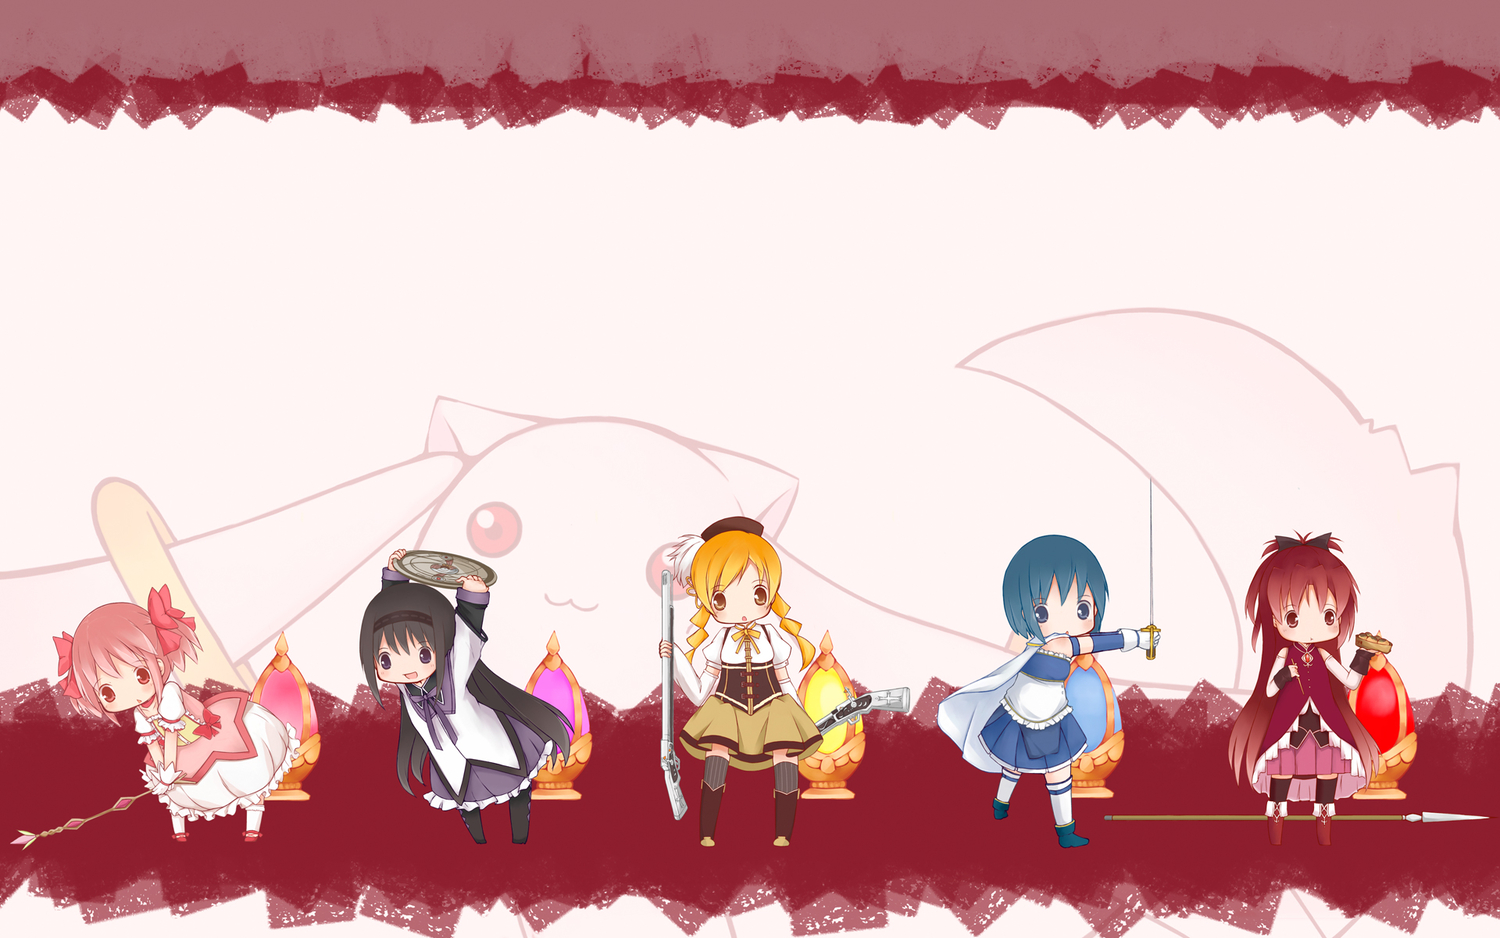 Téléchargez gratuitement l'image Animé, Kyōko Sakura, Puella Magi Madoka Magica, Homura Akemi, Madoka Kaname, Maman Tomoe, Sayaka Miki, Kyuubey (Puella Magi Madoka Magica) sur le bureau de votre PC